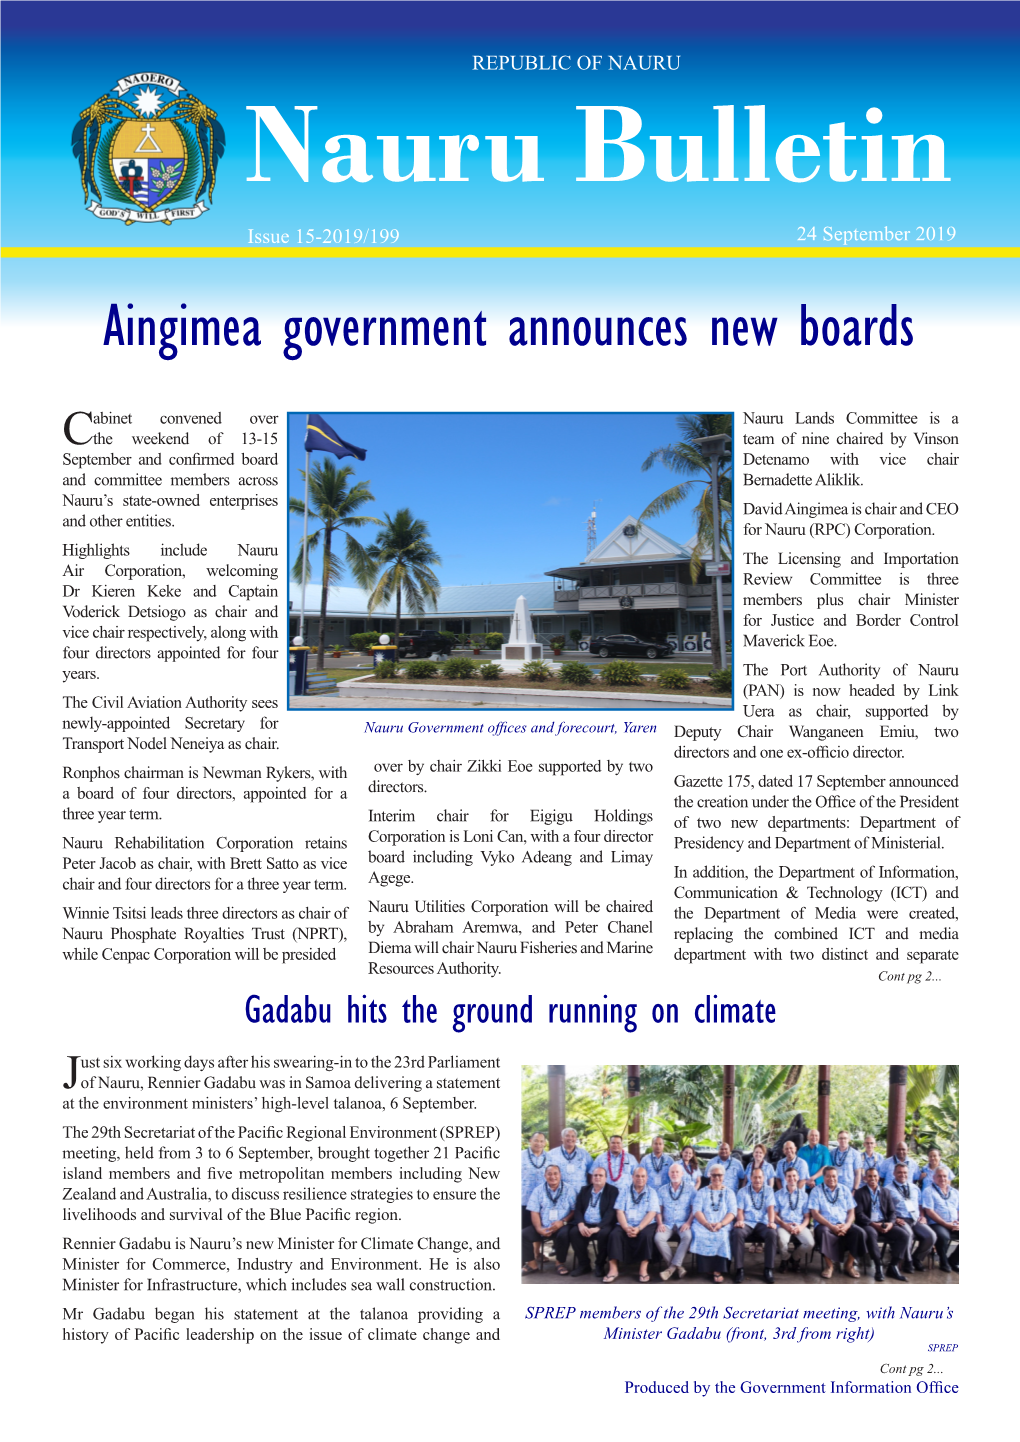 Aingimea Government Announces New Boards